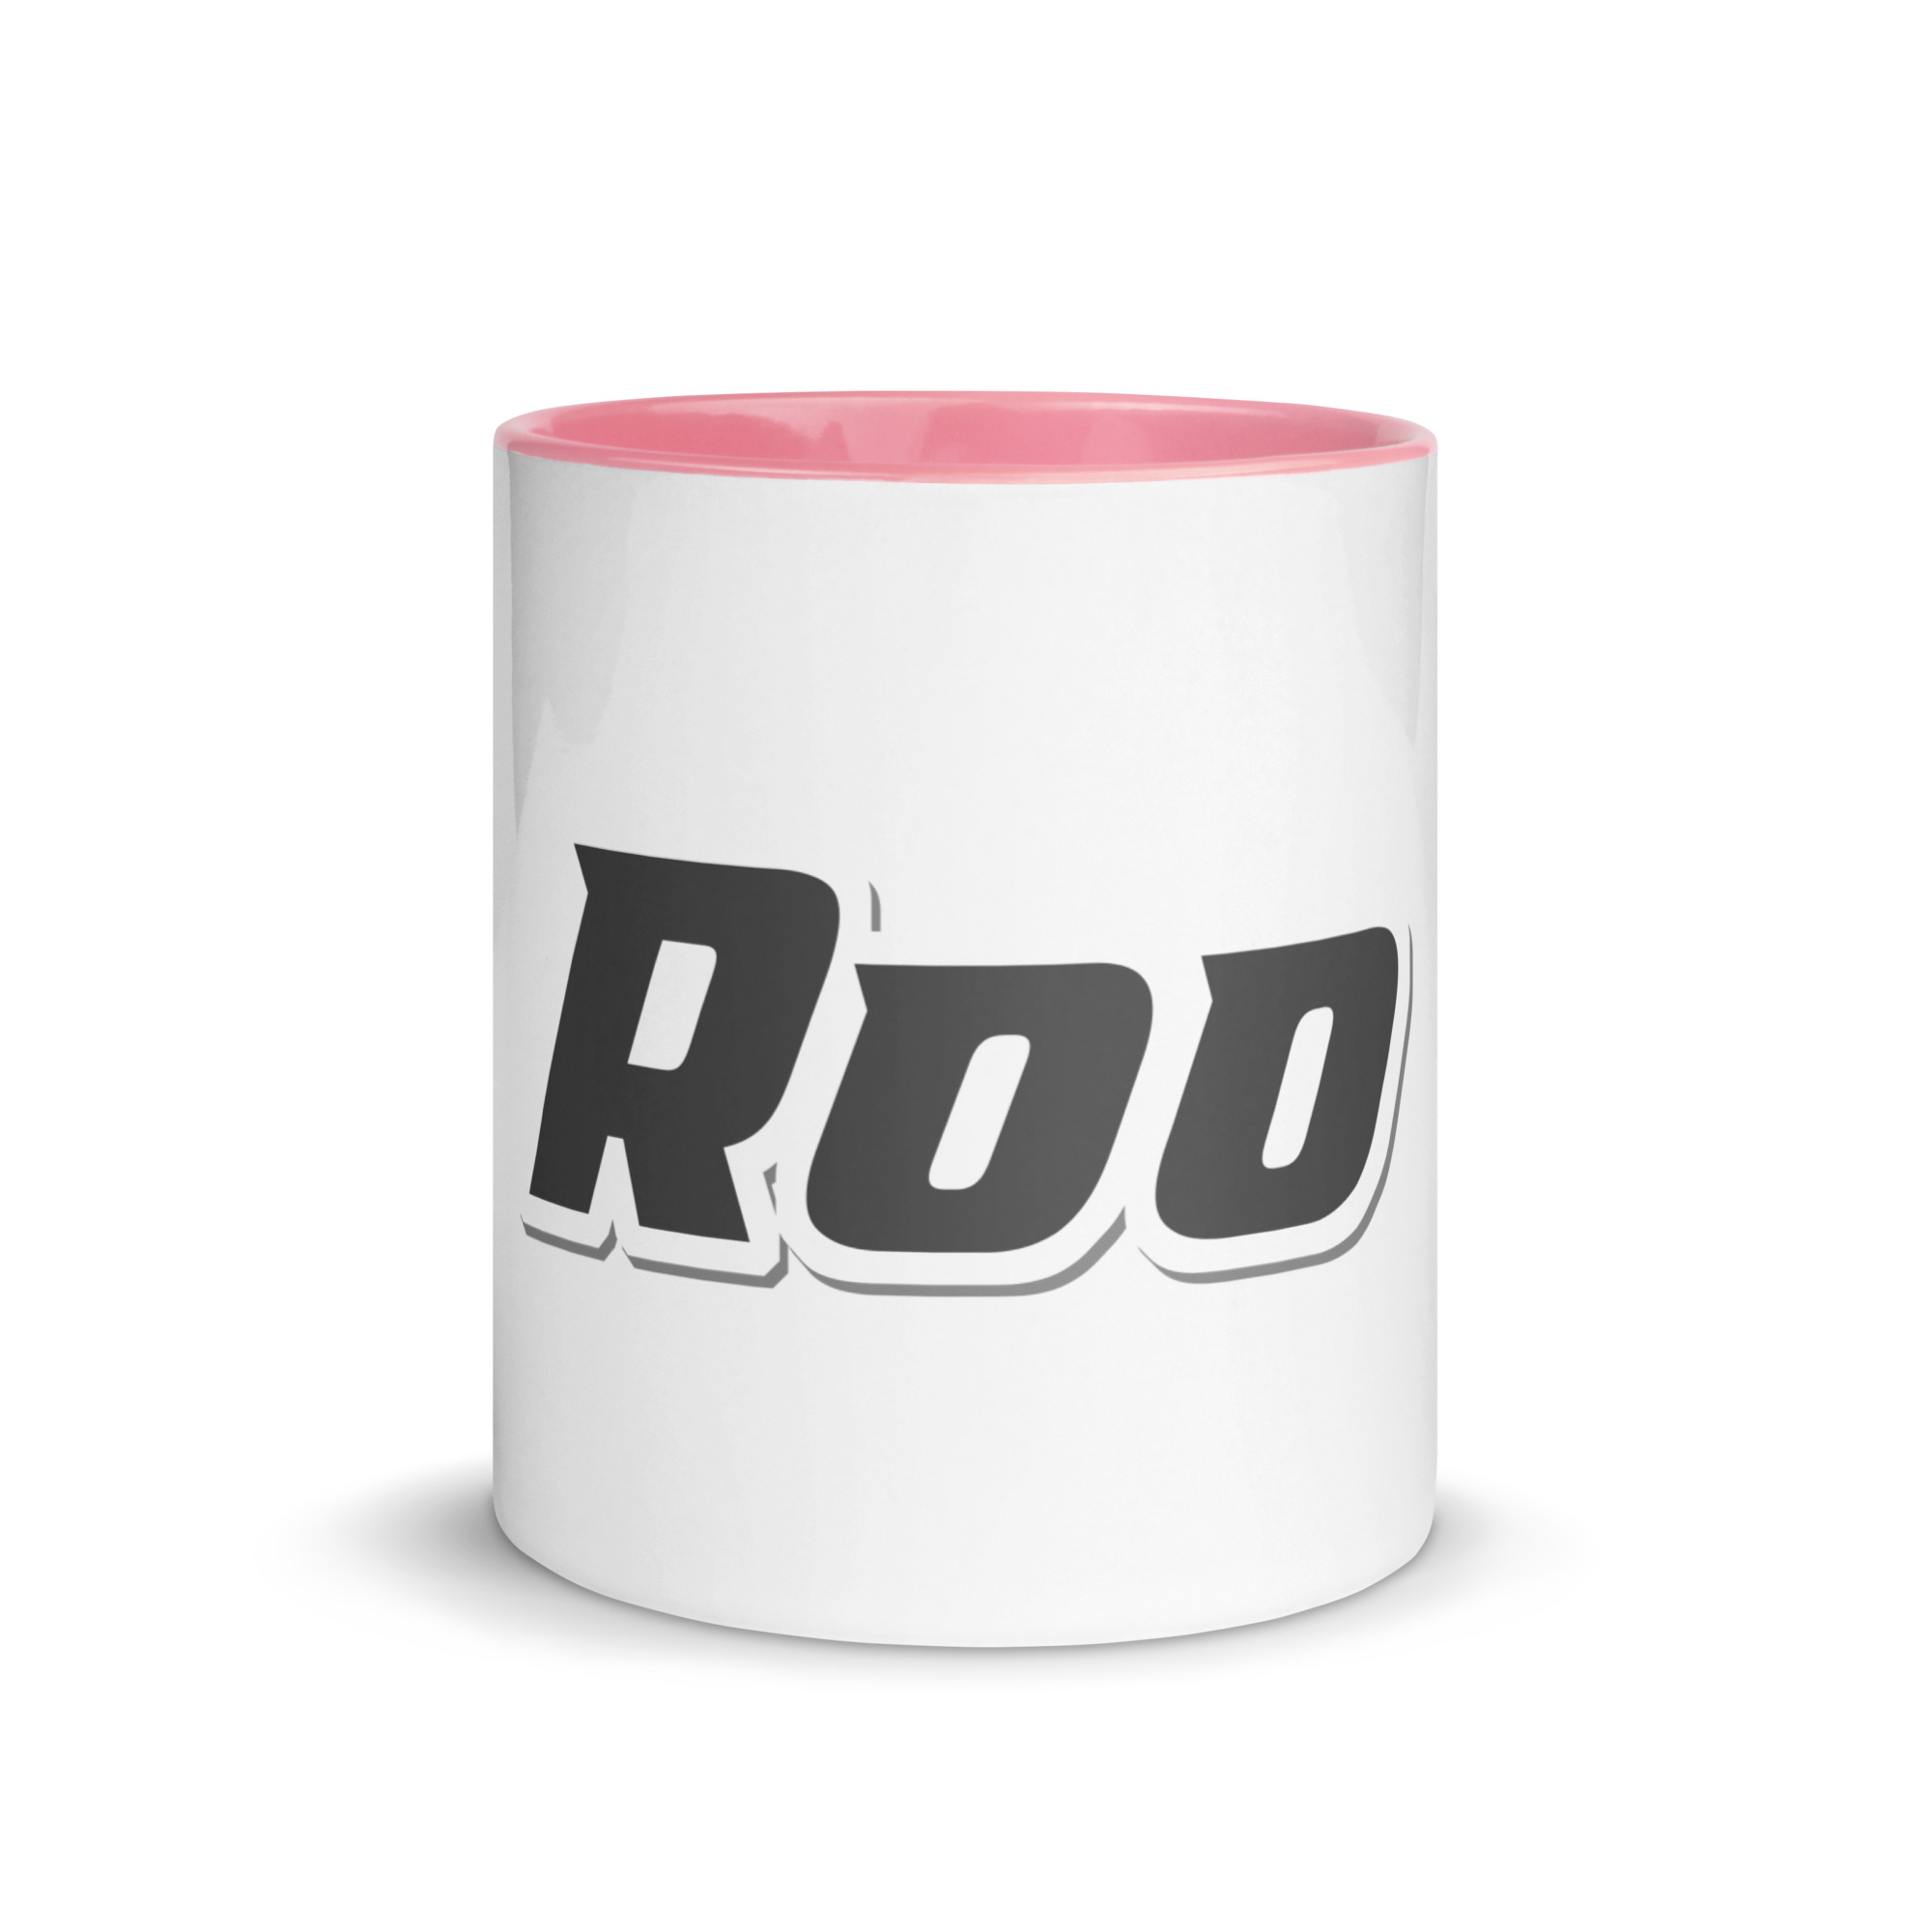 white-ceramic-mug-with-color-inside-pink-11-oz-front-6525b6484c9a6.jpg